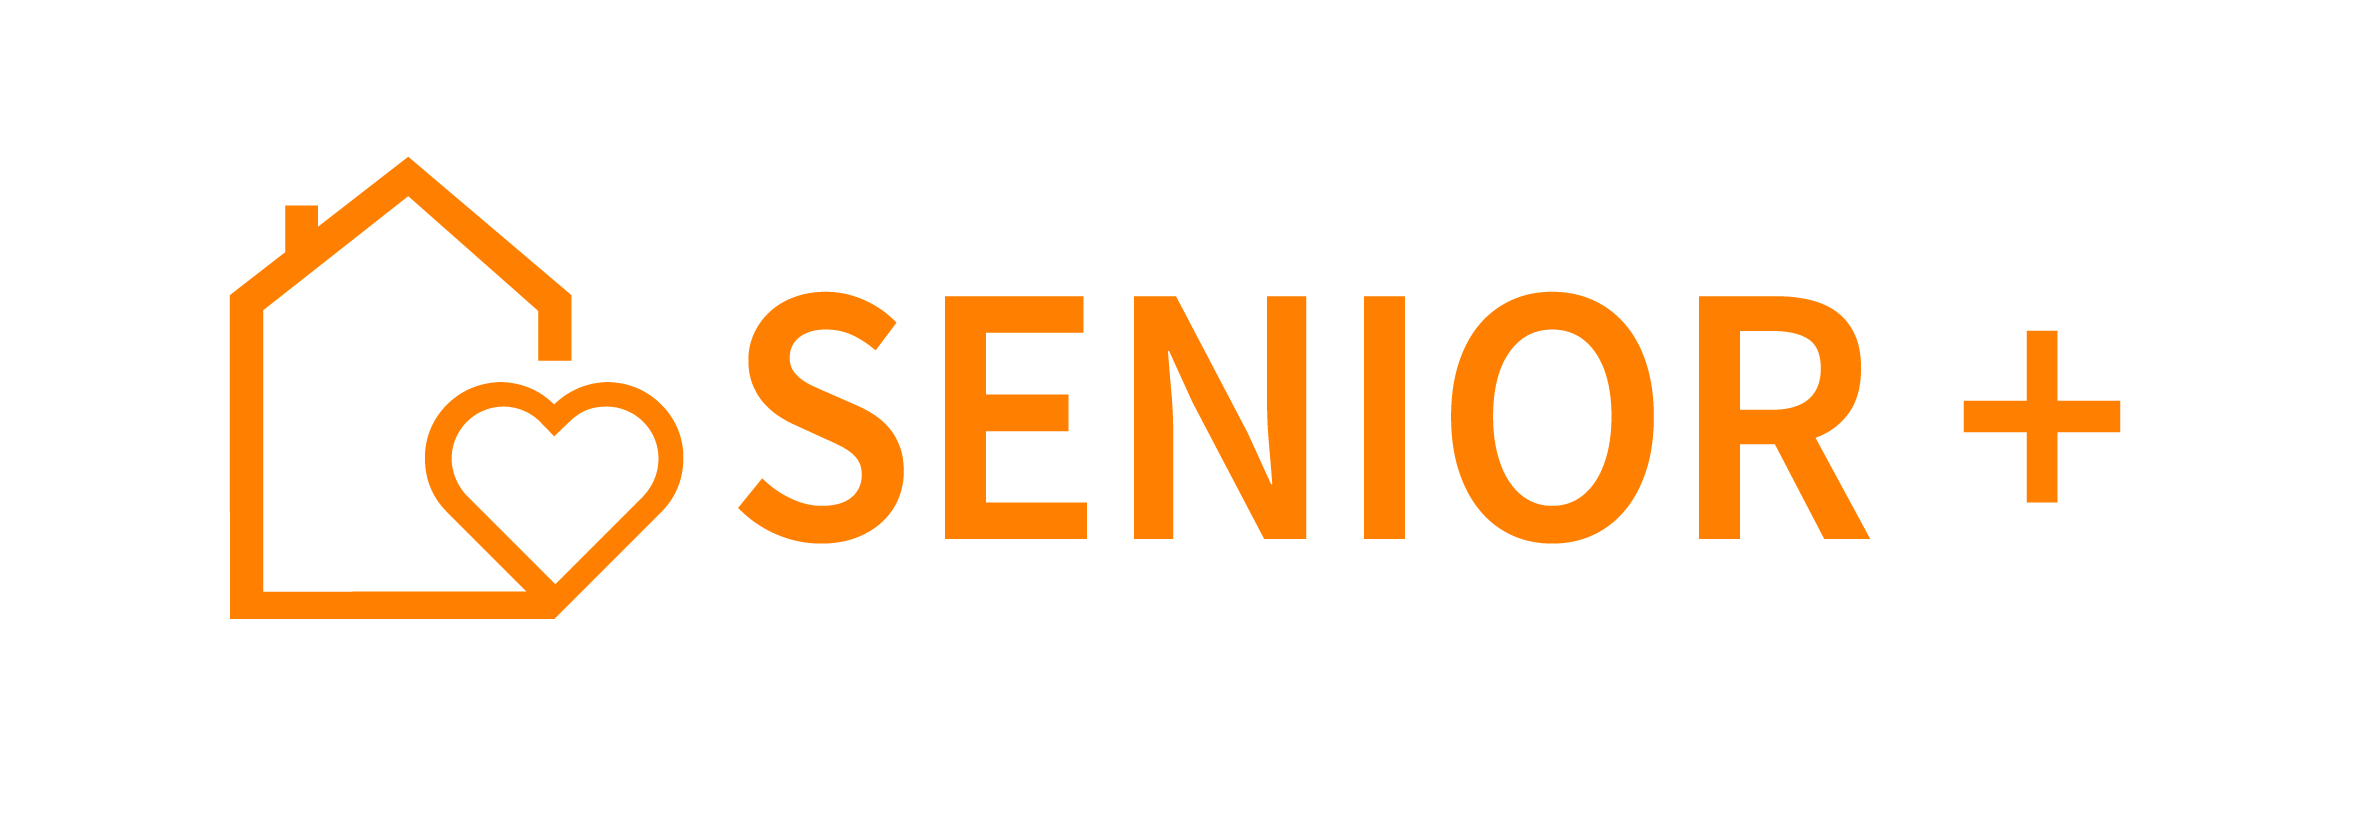 senior plus logo